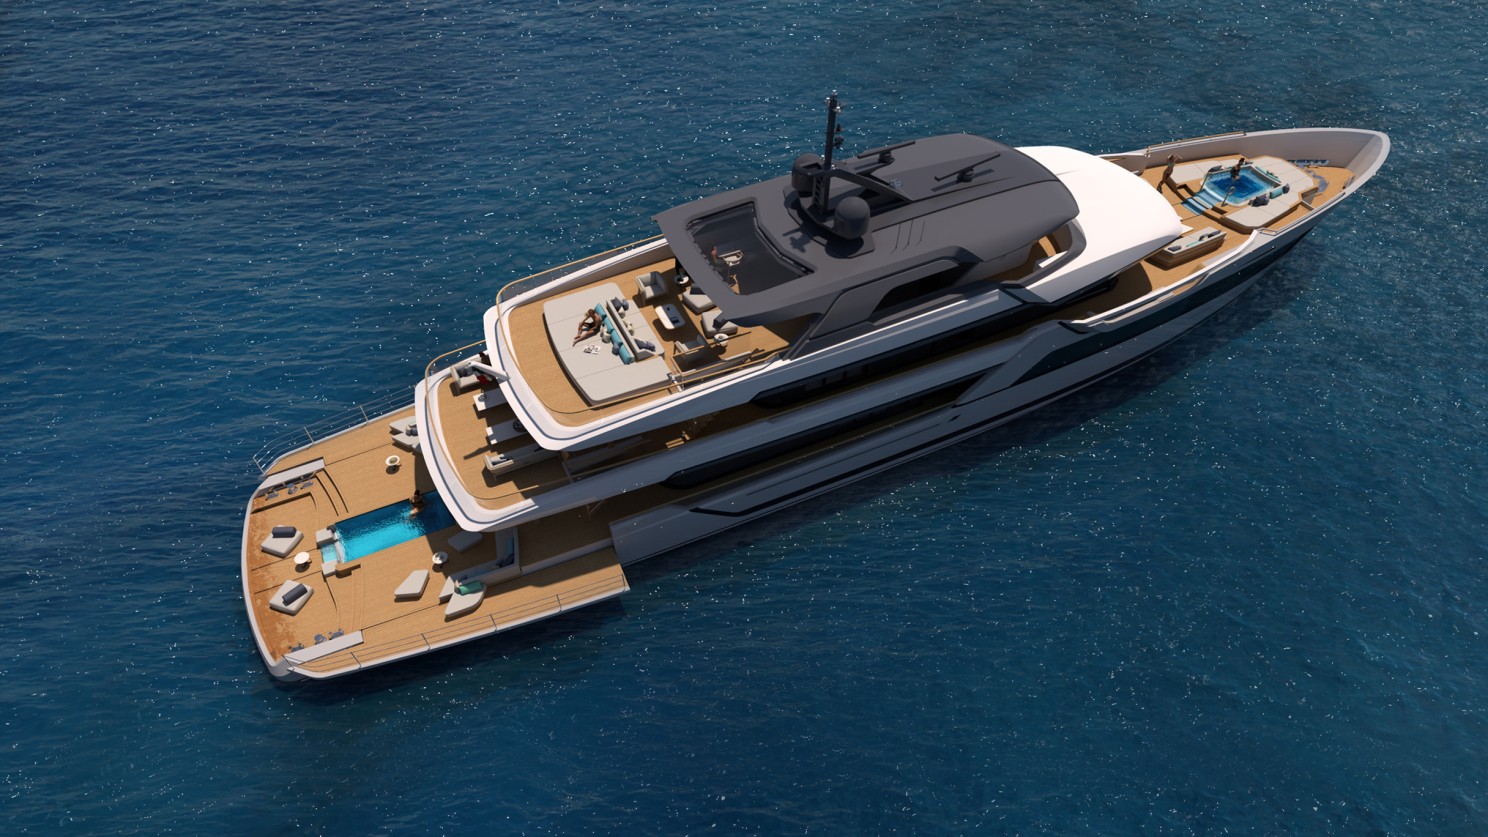 Hydro Tec reveals Sagasu, its latest concept, MTB Events. Image shows concept art of the superyacht named Sagasu.